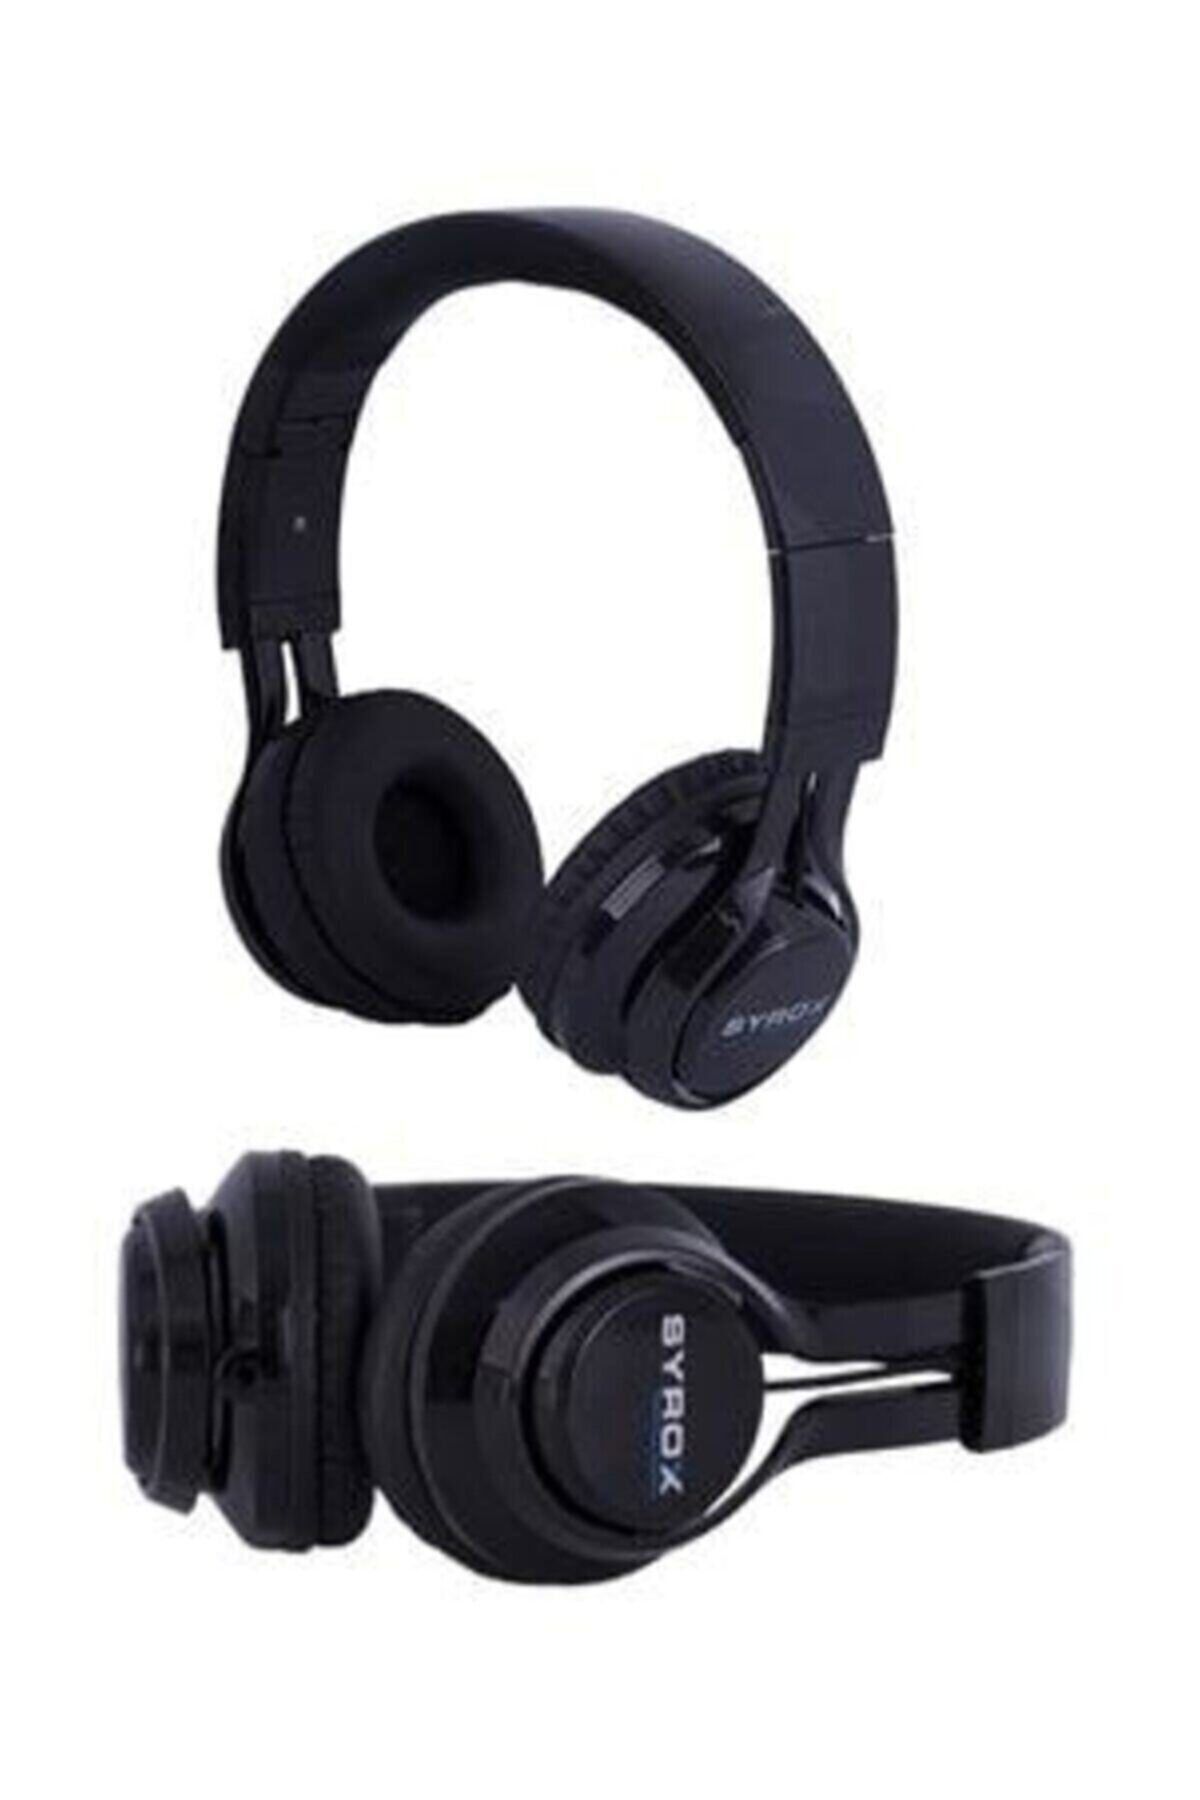 Syrox J-50 K11 Siyah Kulaküstü Mikrofonlu Aux Kablolu Kulaklık